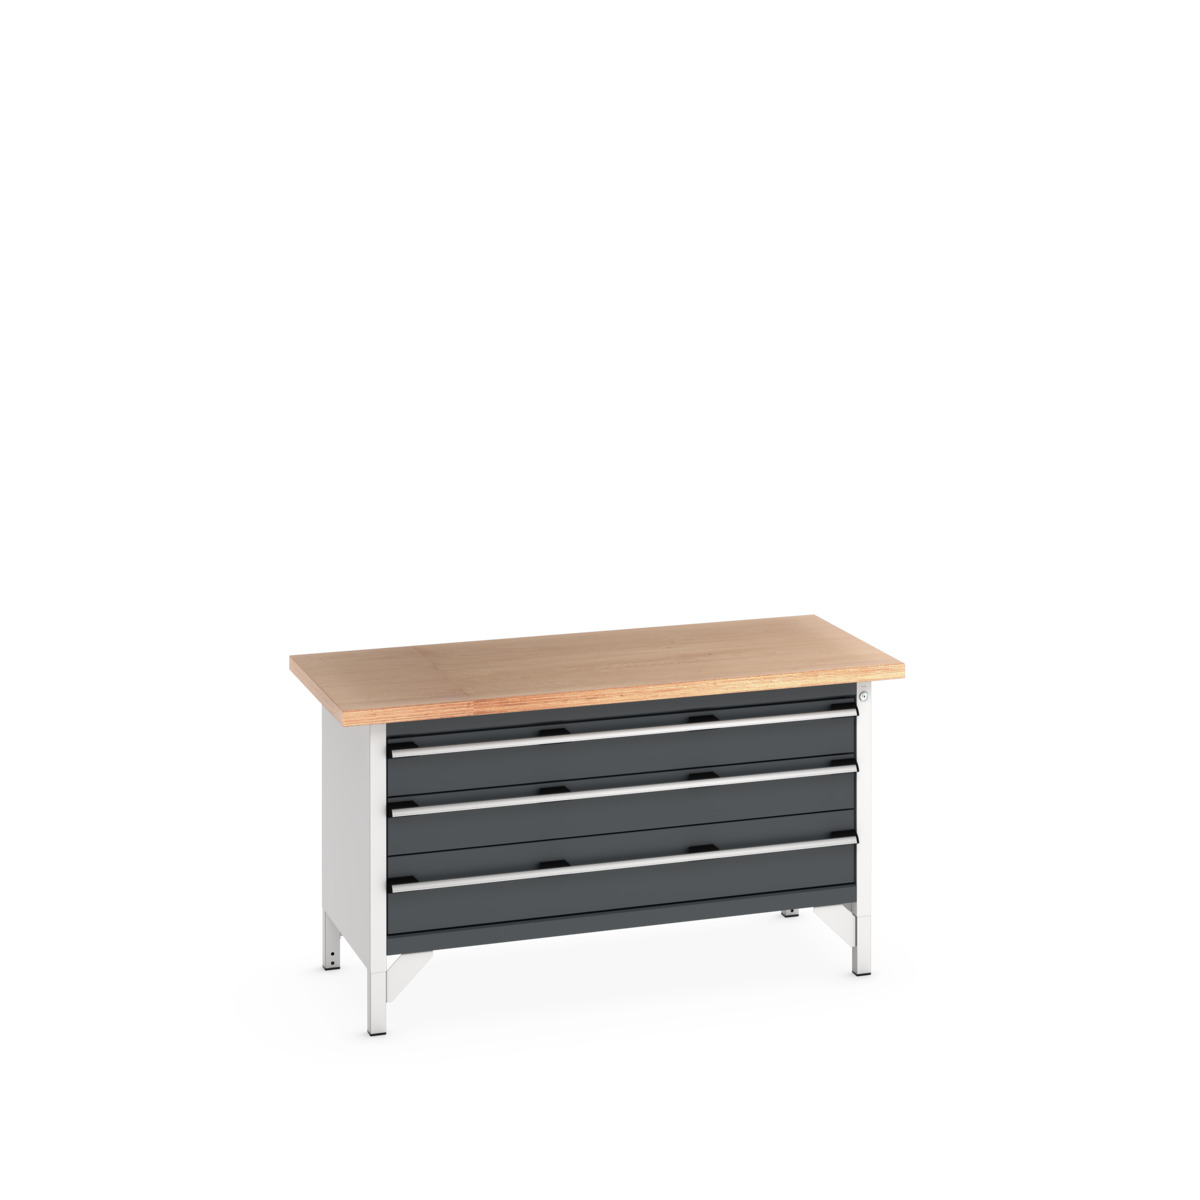 41002169. - cubio storage bench (mpx)